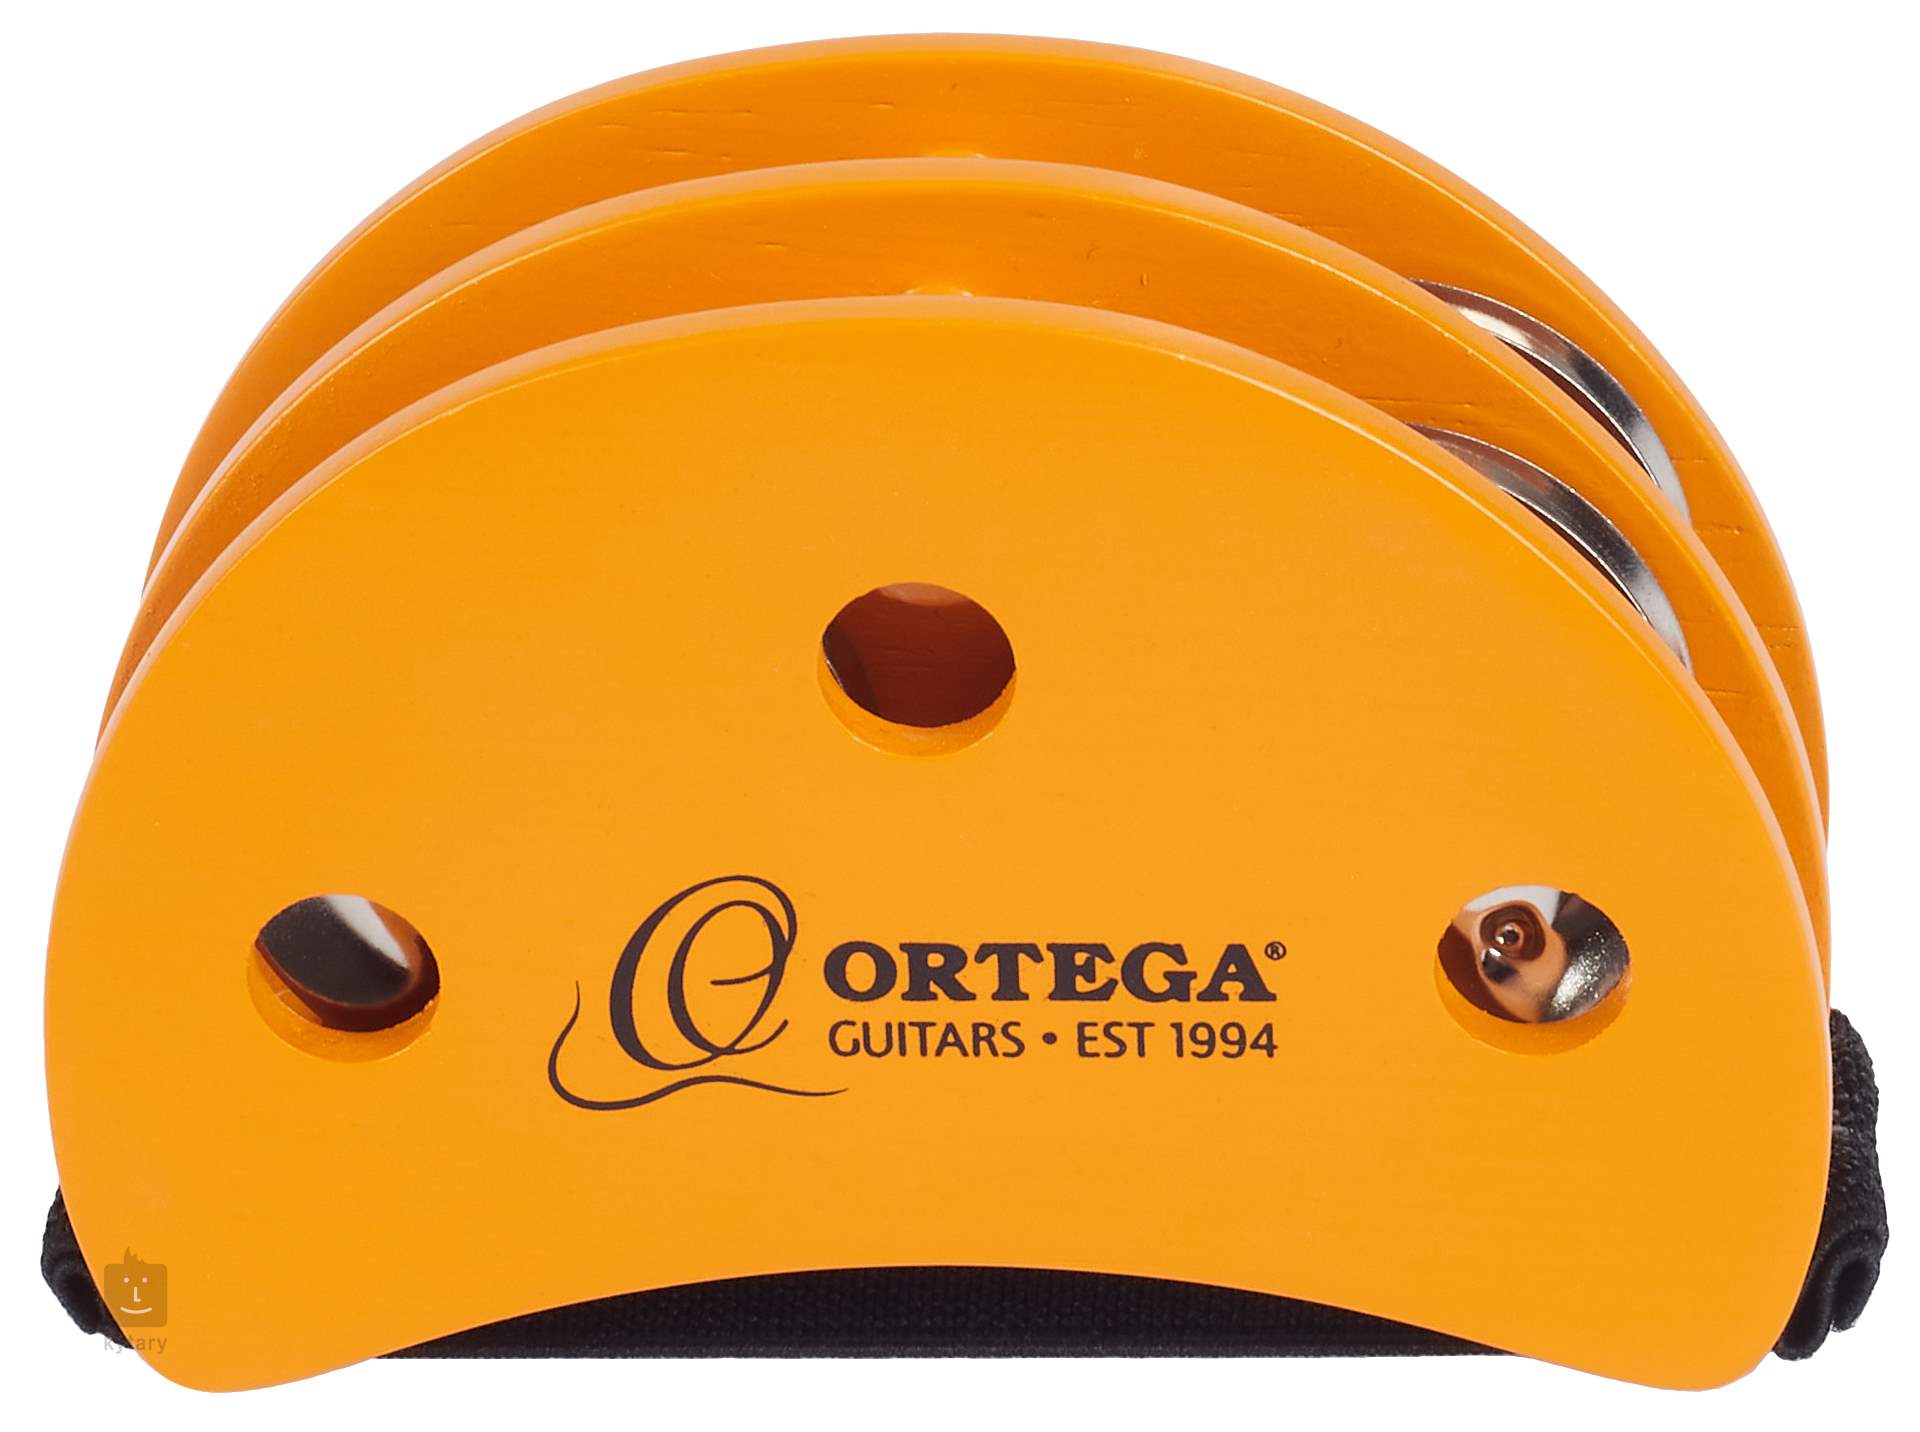 Ortega Guitars Percussive Foot Tambourine OGFT 